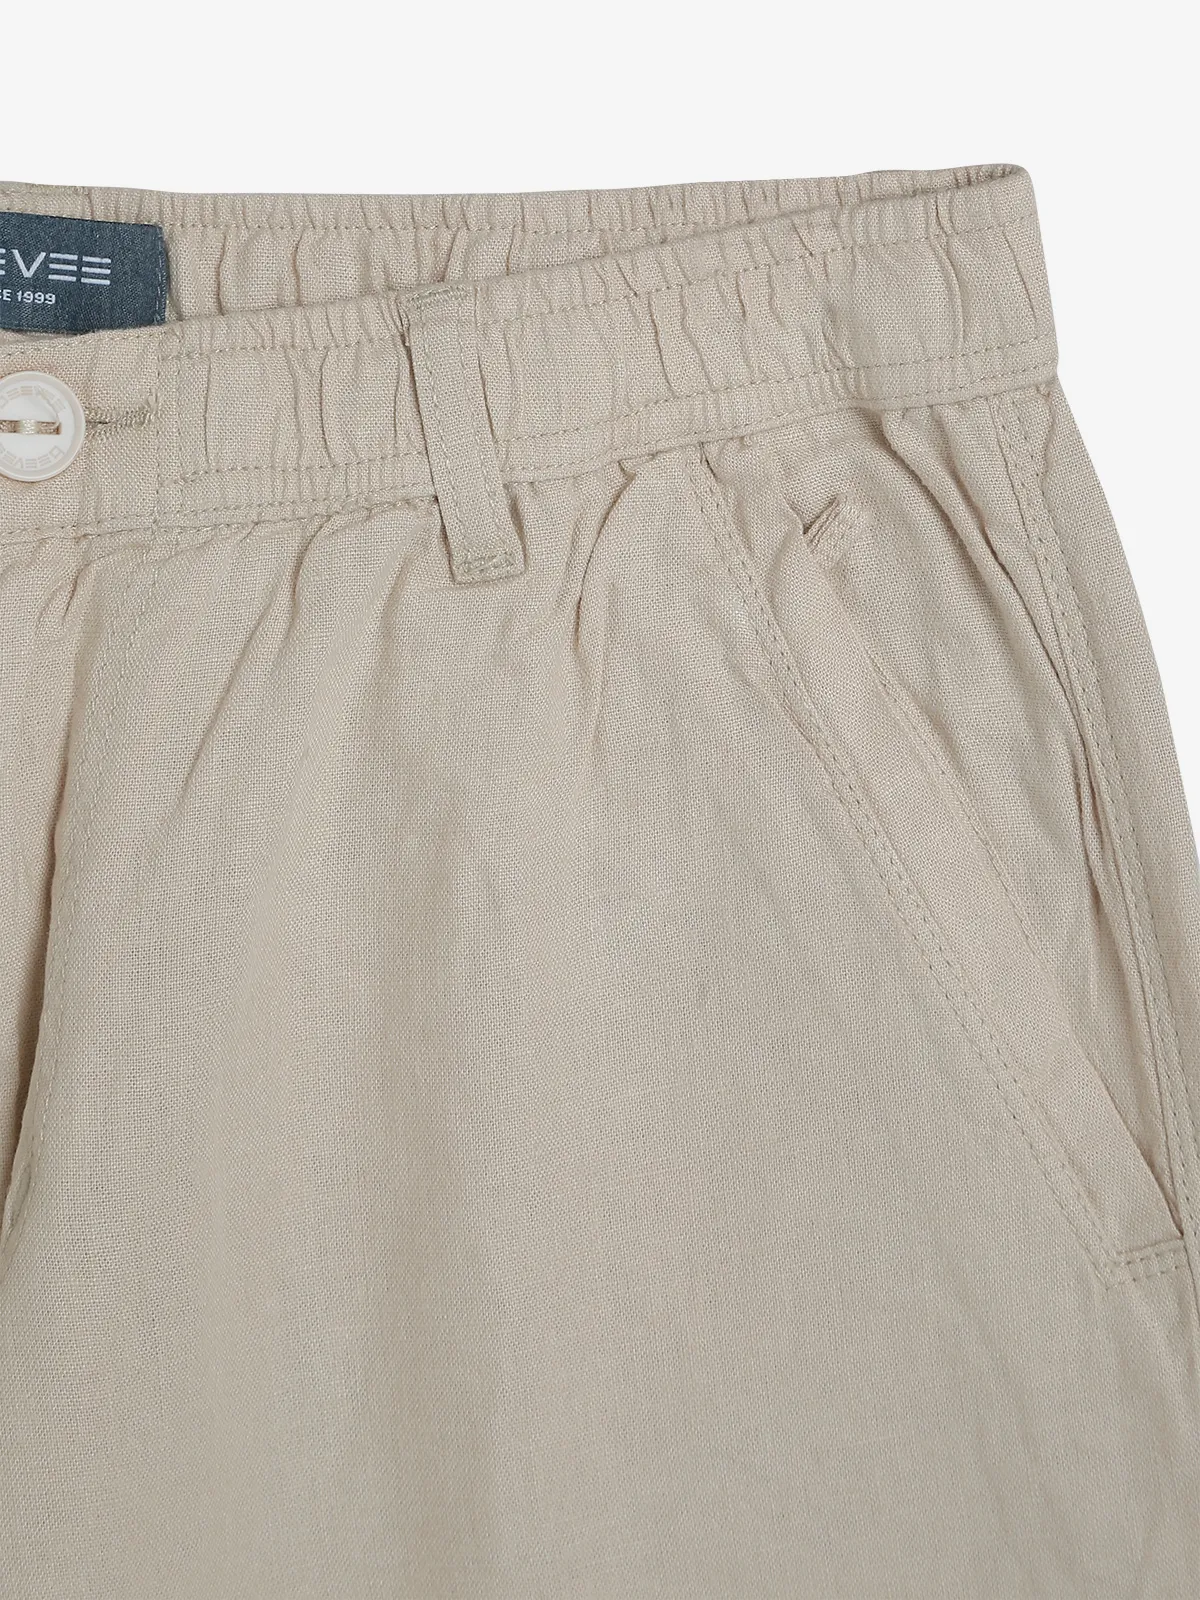 Beevee beige solid shorts